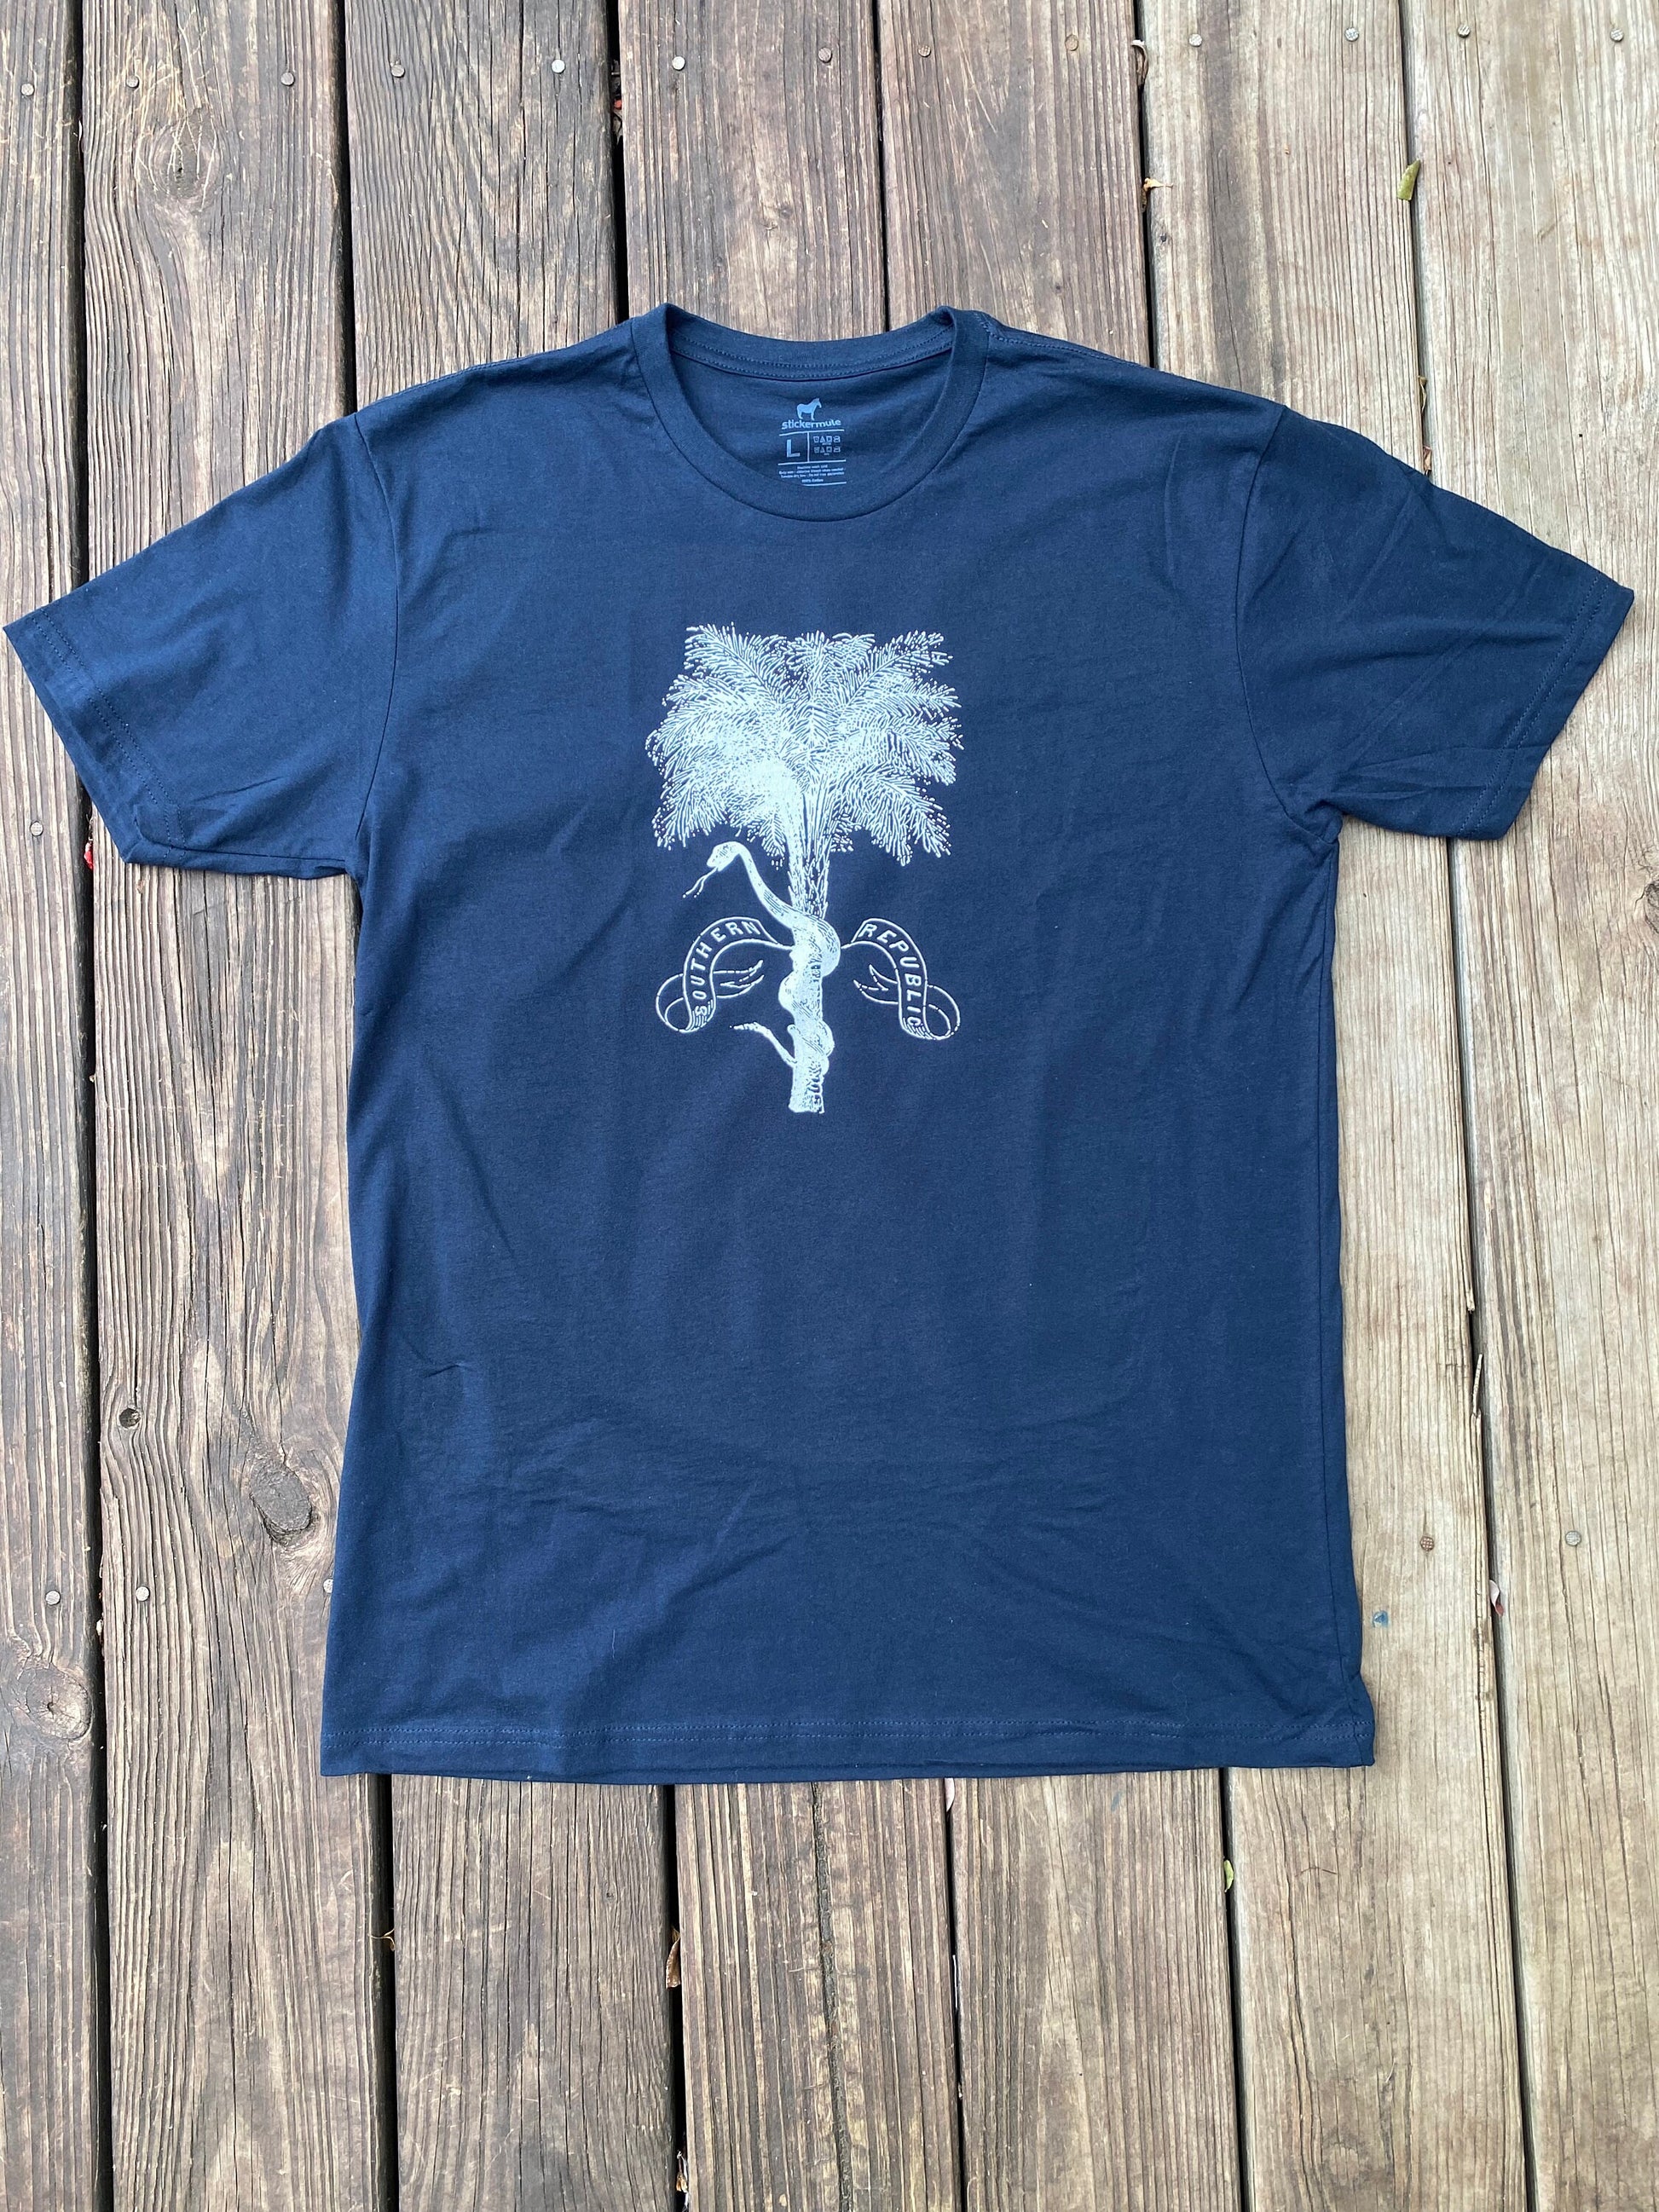 Southern Republic Blue T-Shirt